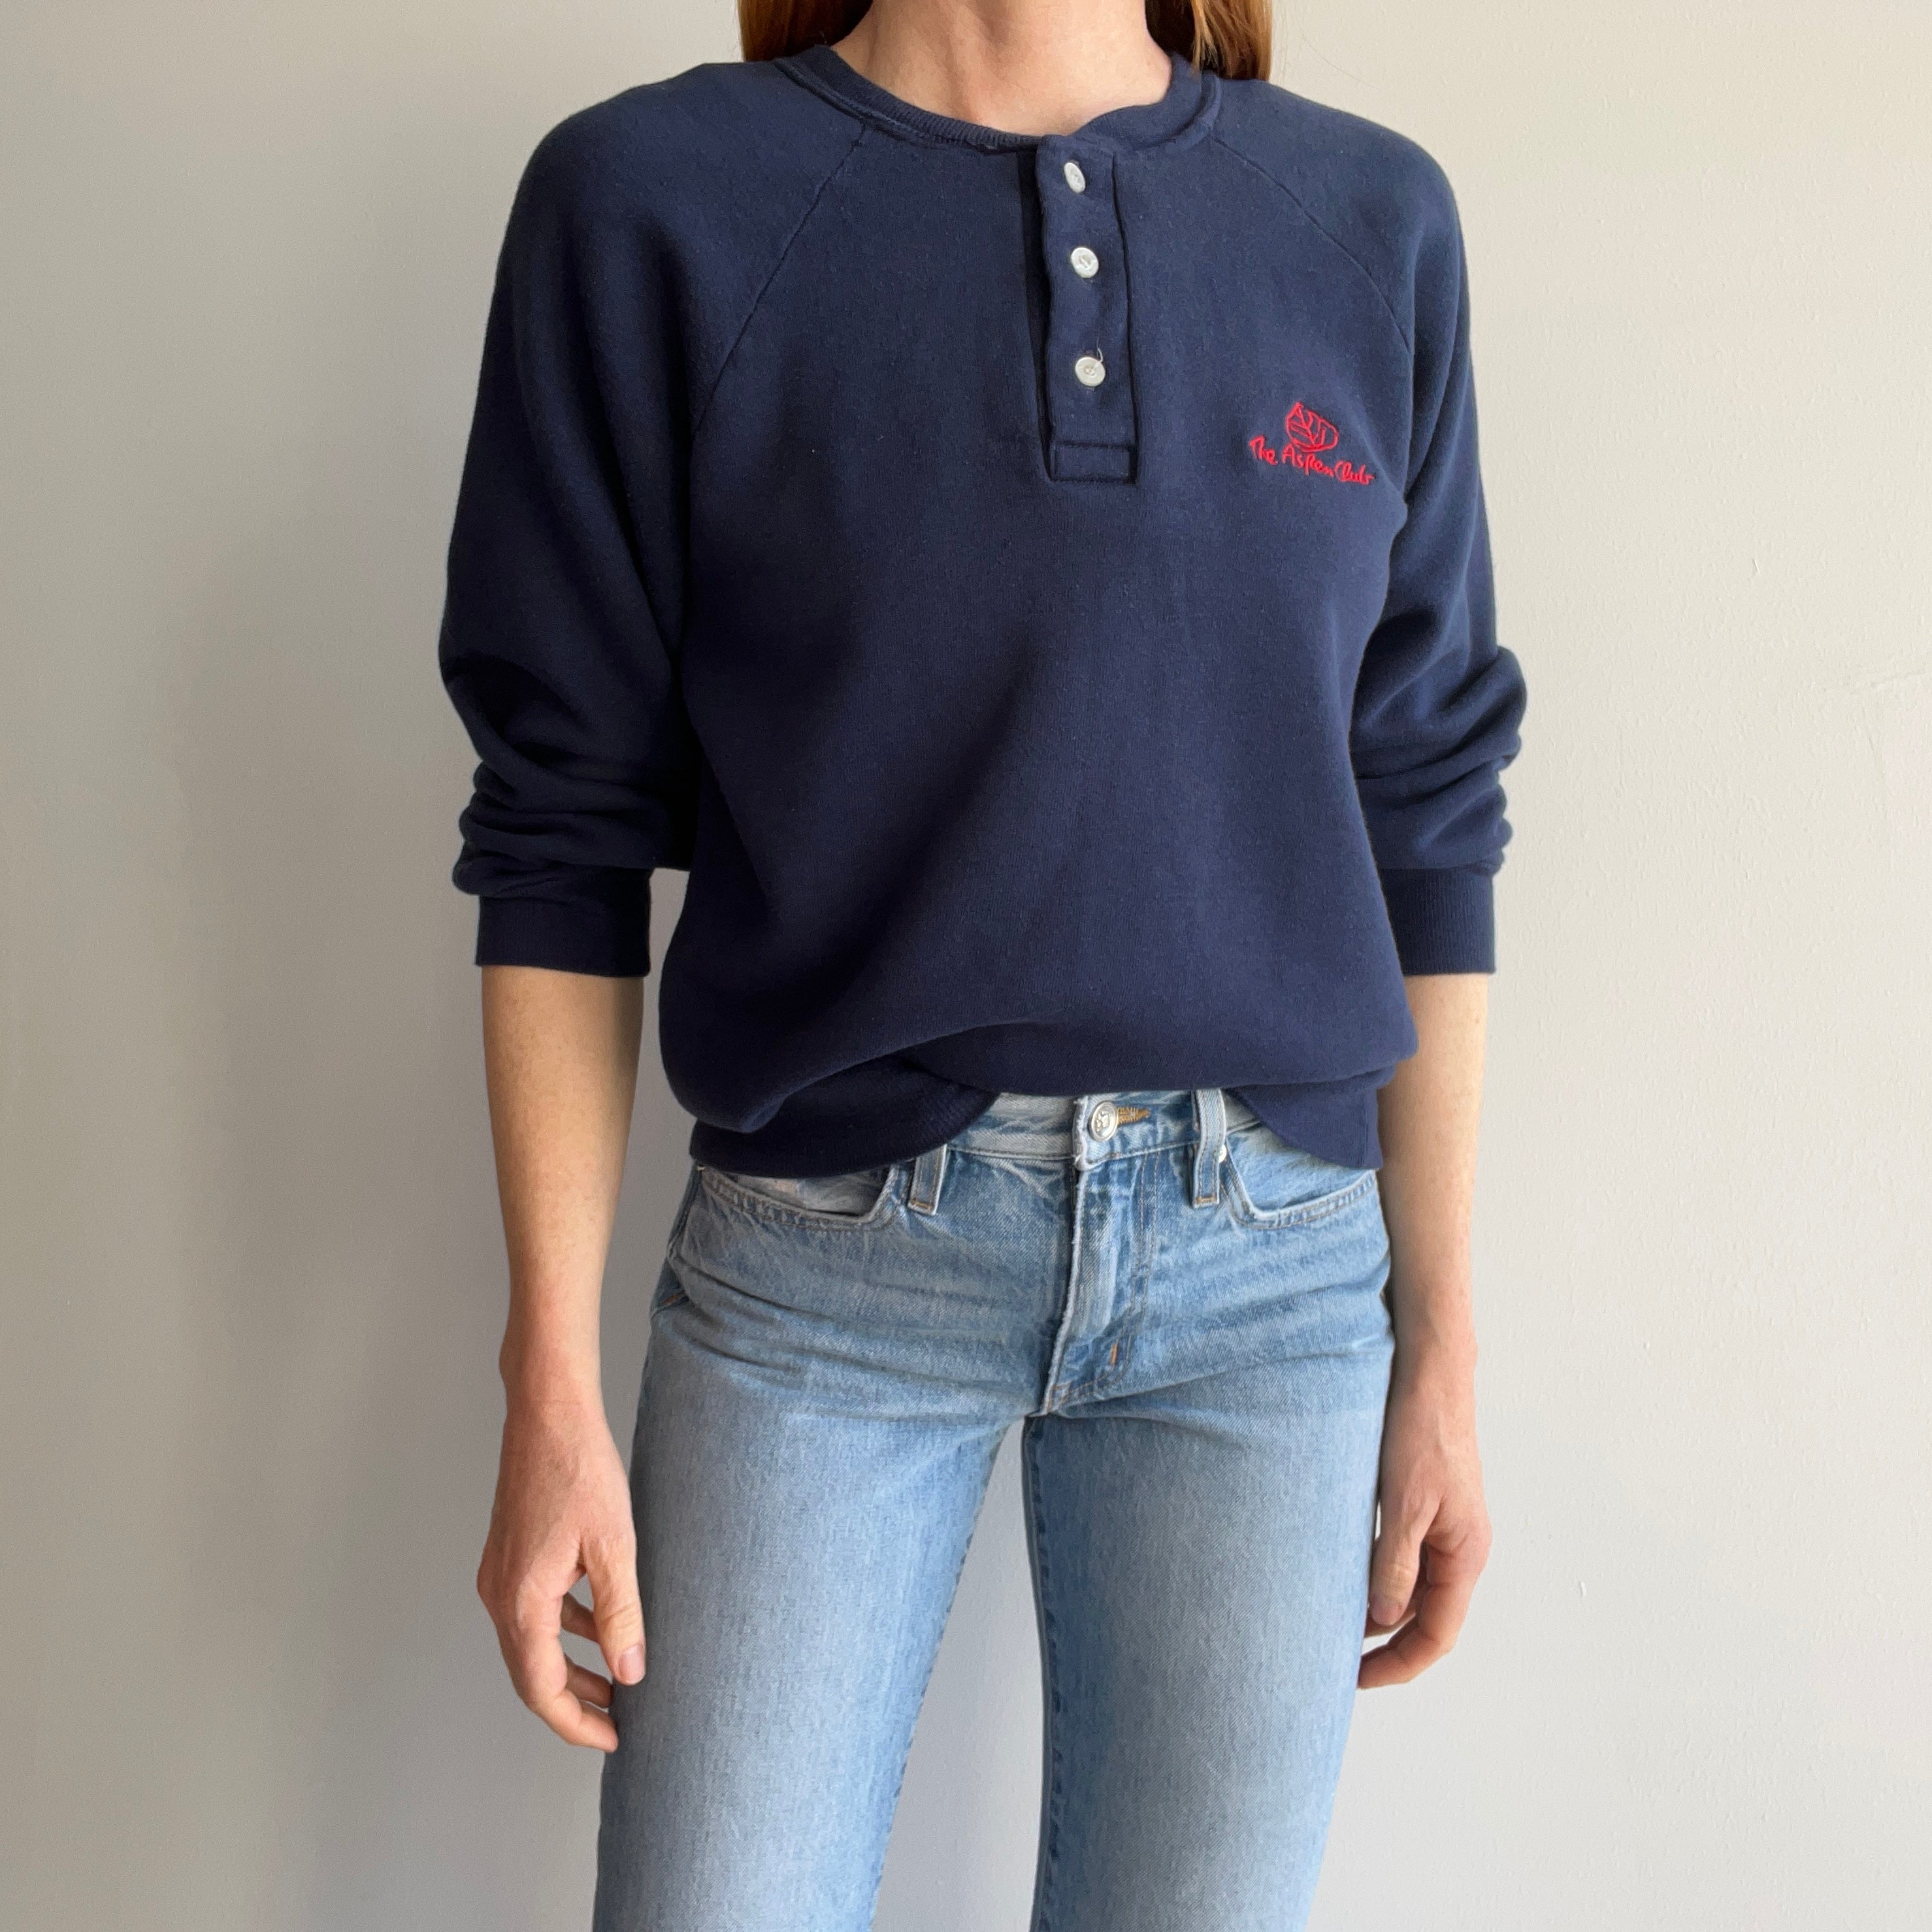 1980s Aspen Club Henley Sweatshirt by Champion Brand (USA Made)